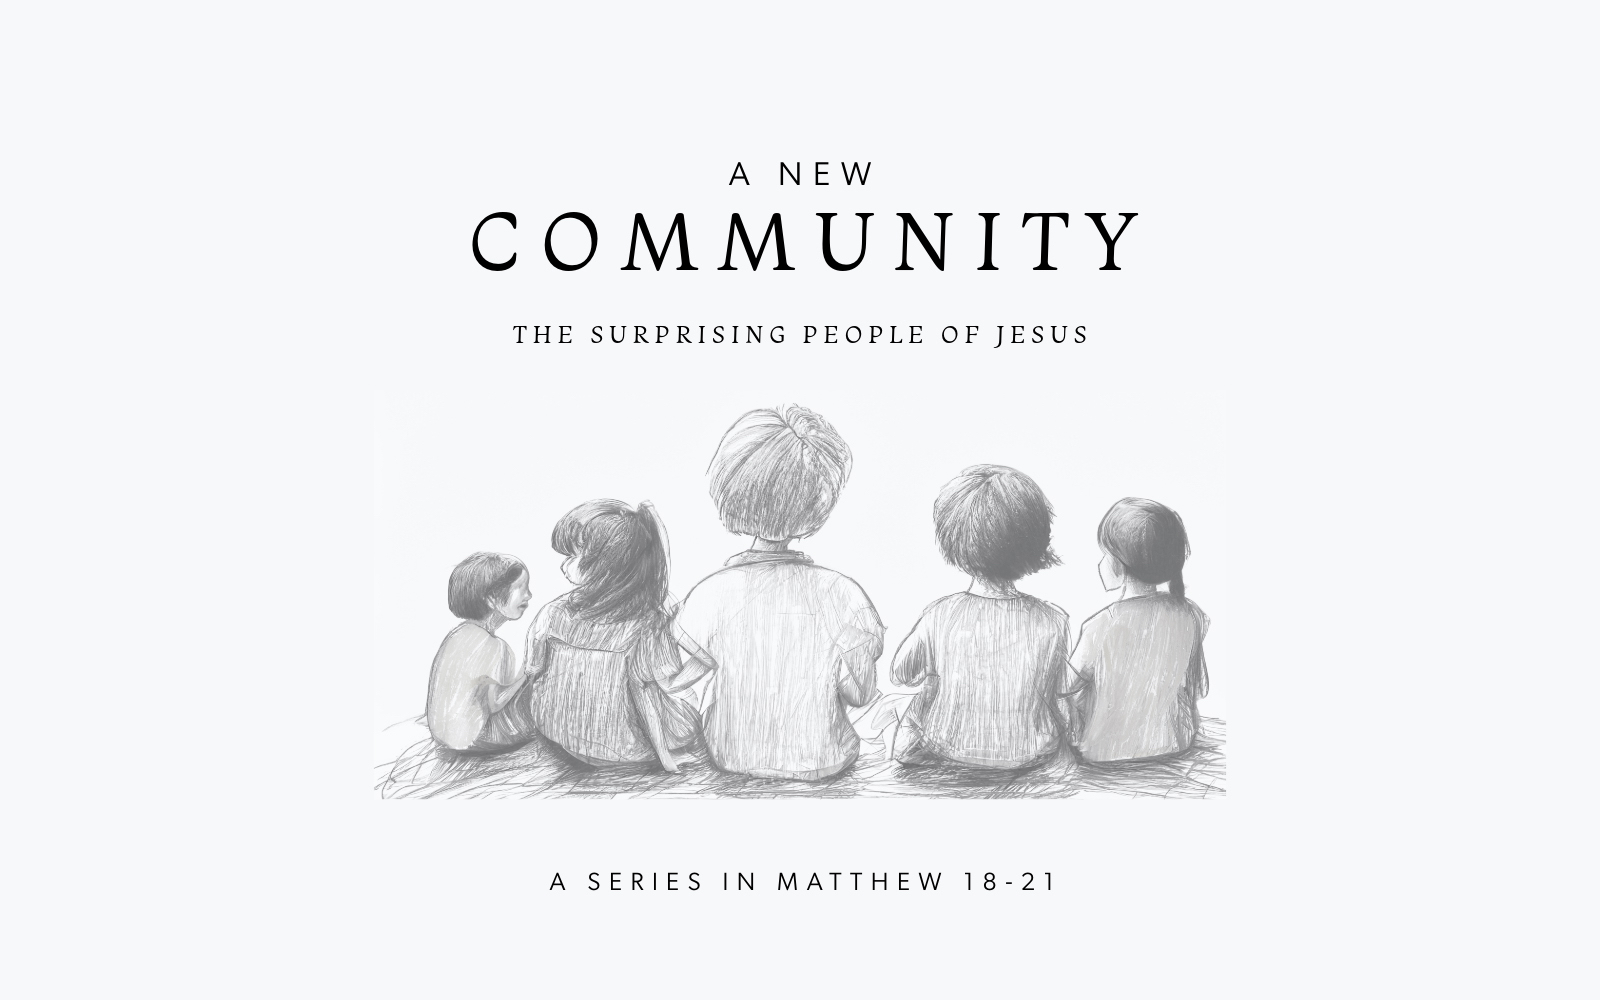 A New Community Studies (Matthew 18-21 Studies)